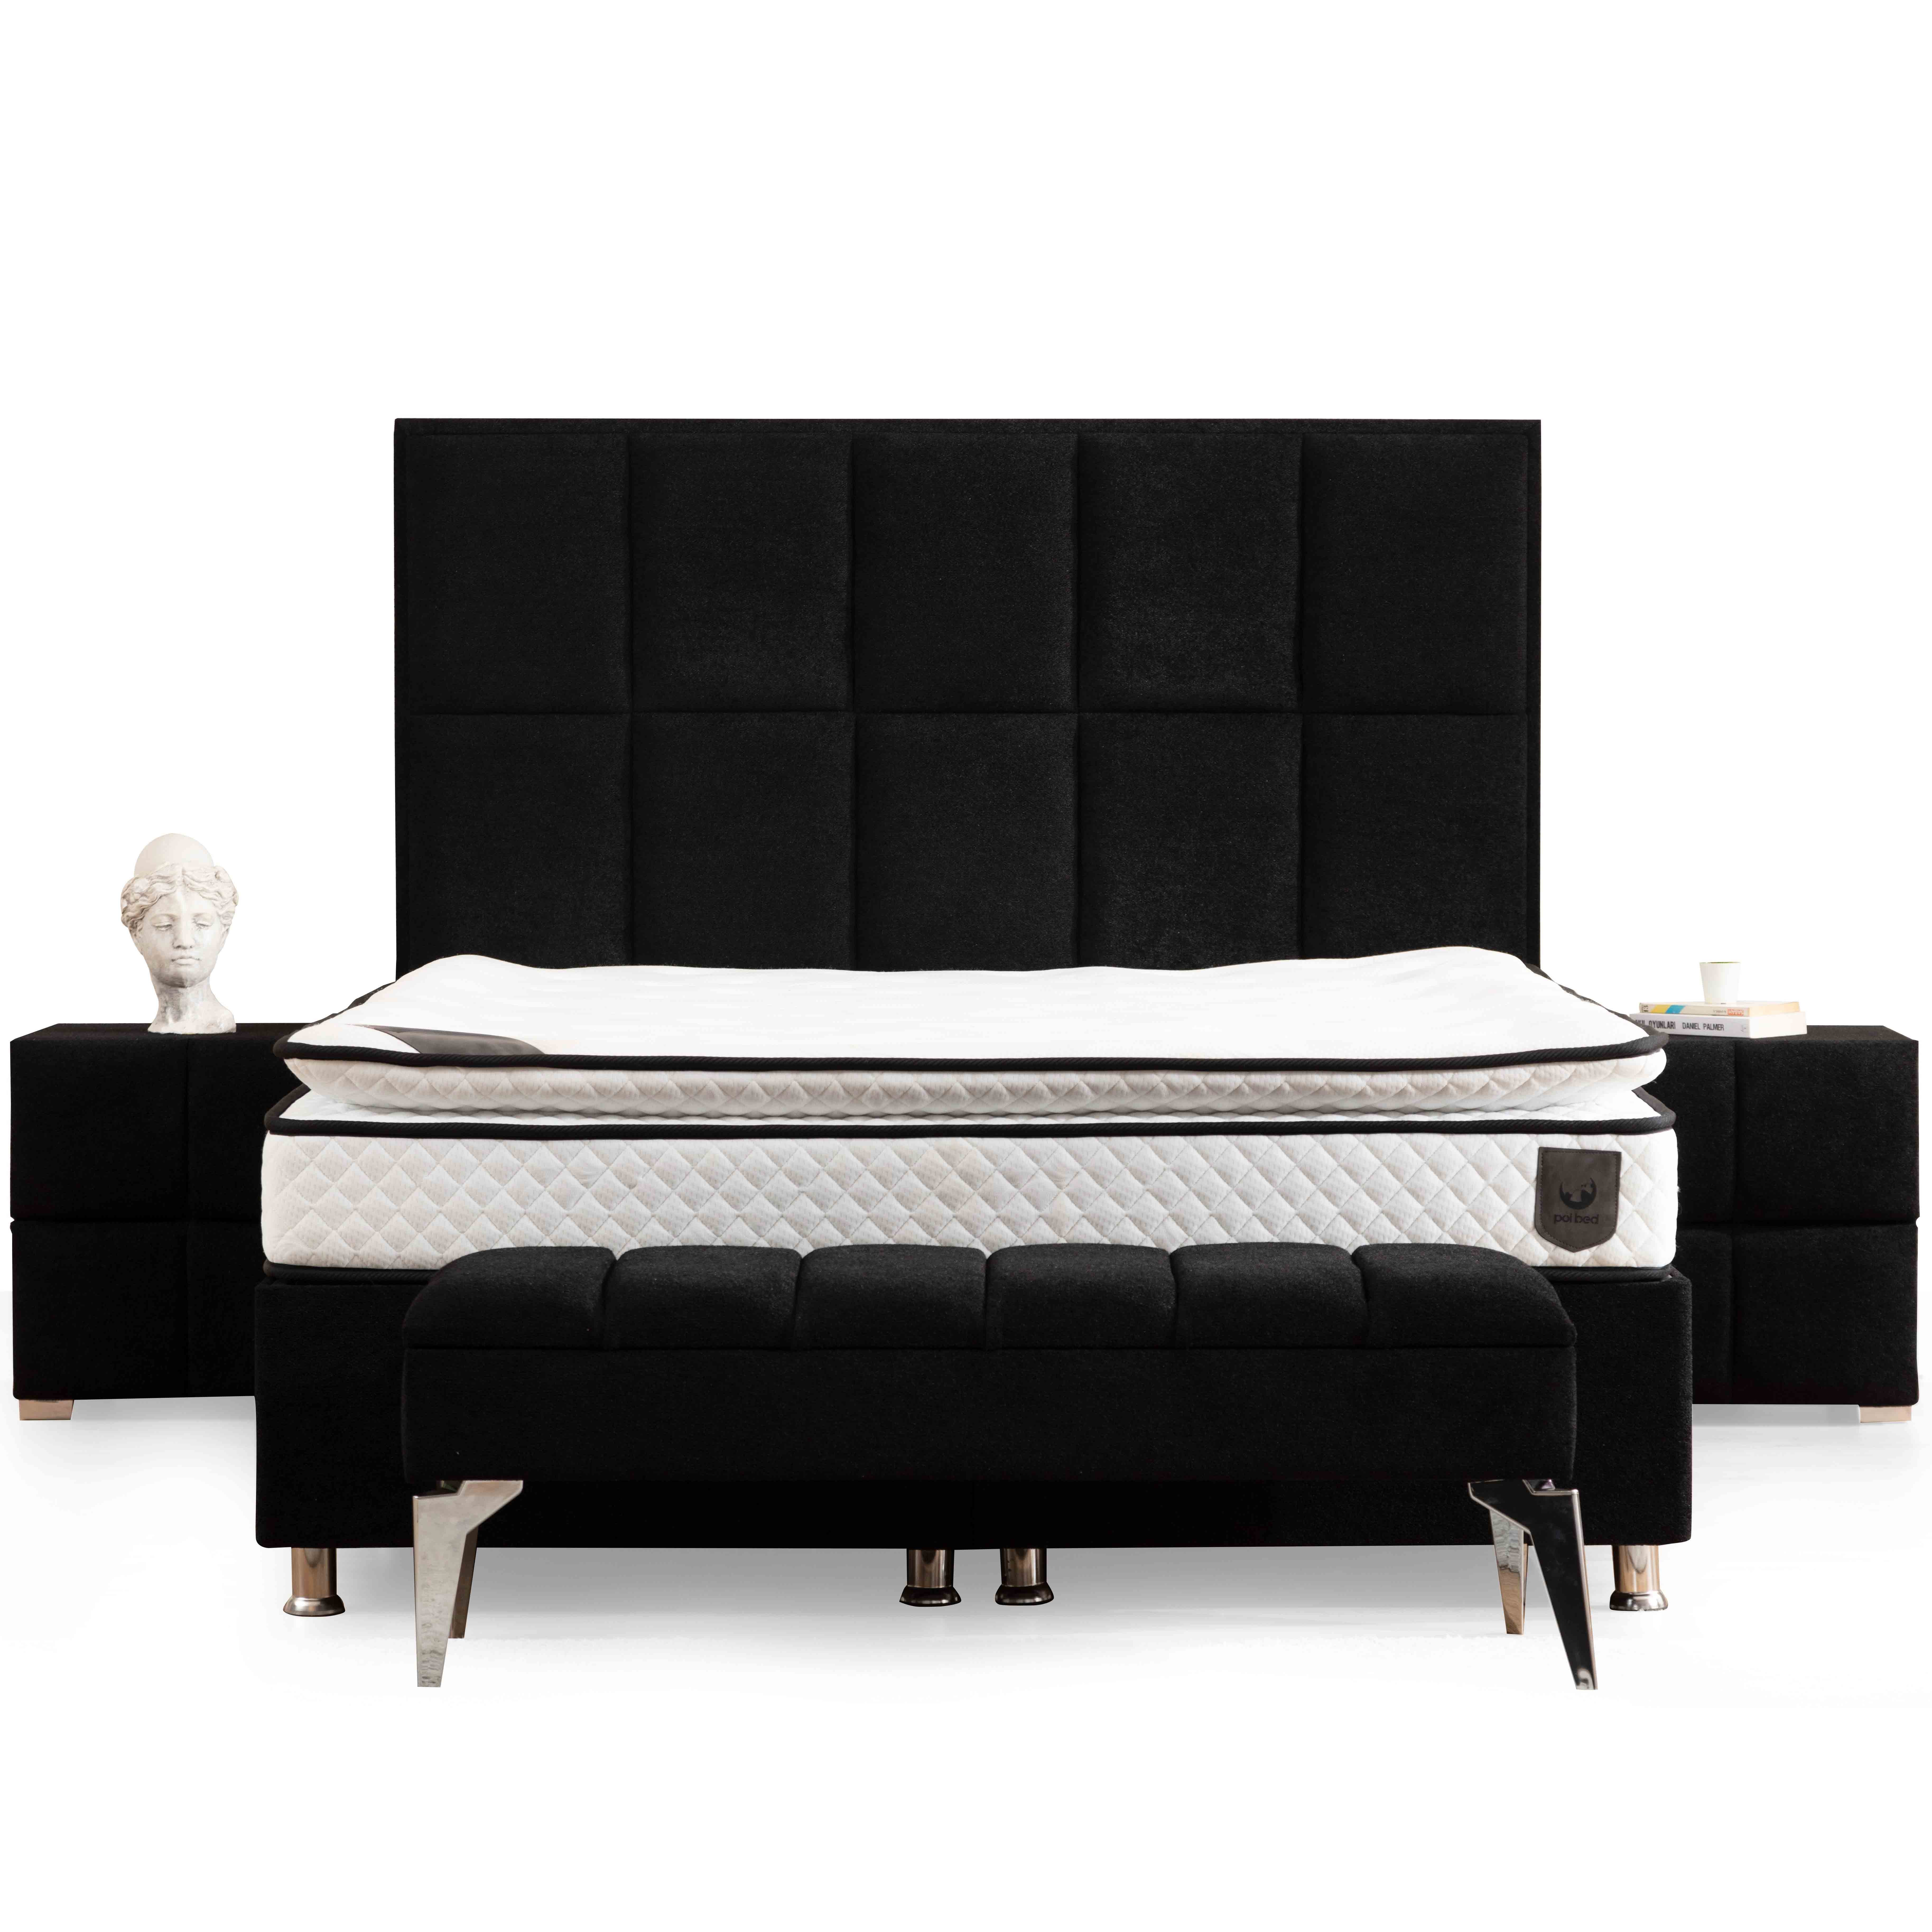 Lovita Bed With Storage 90x190 cm